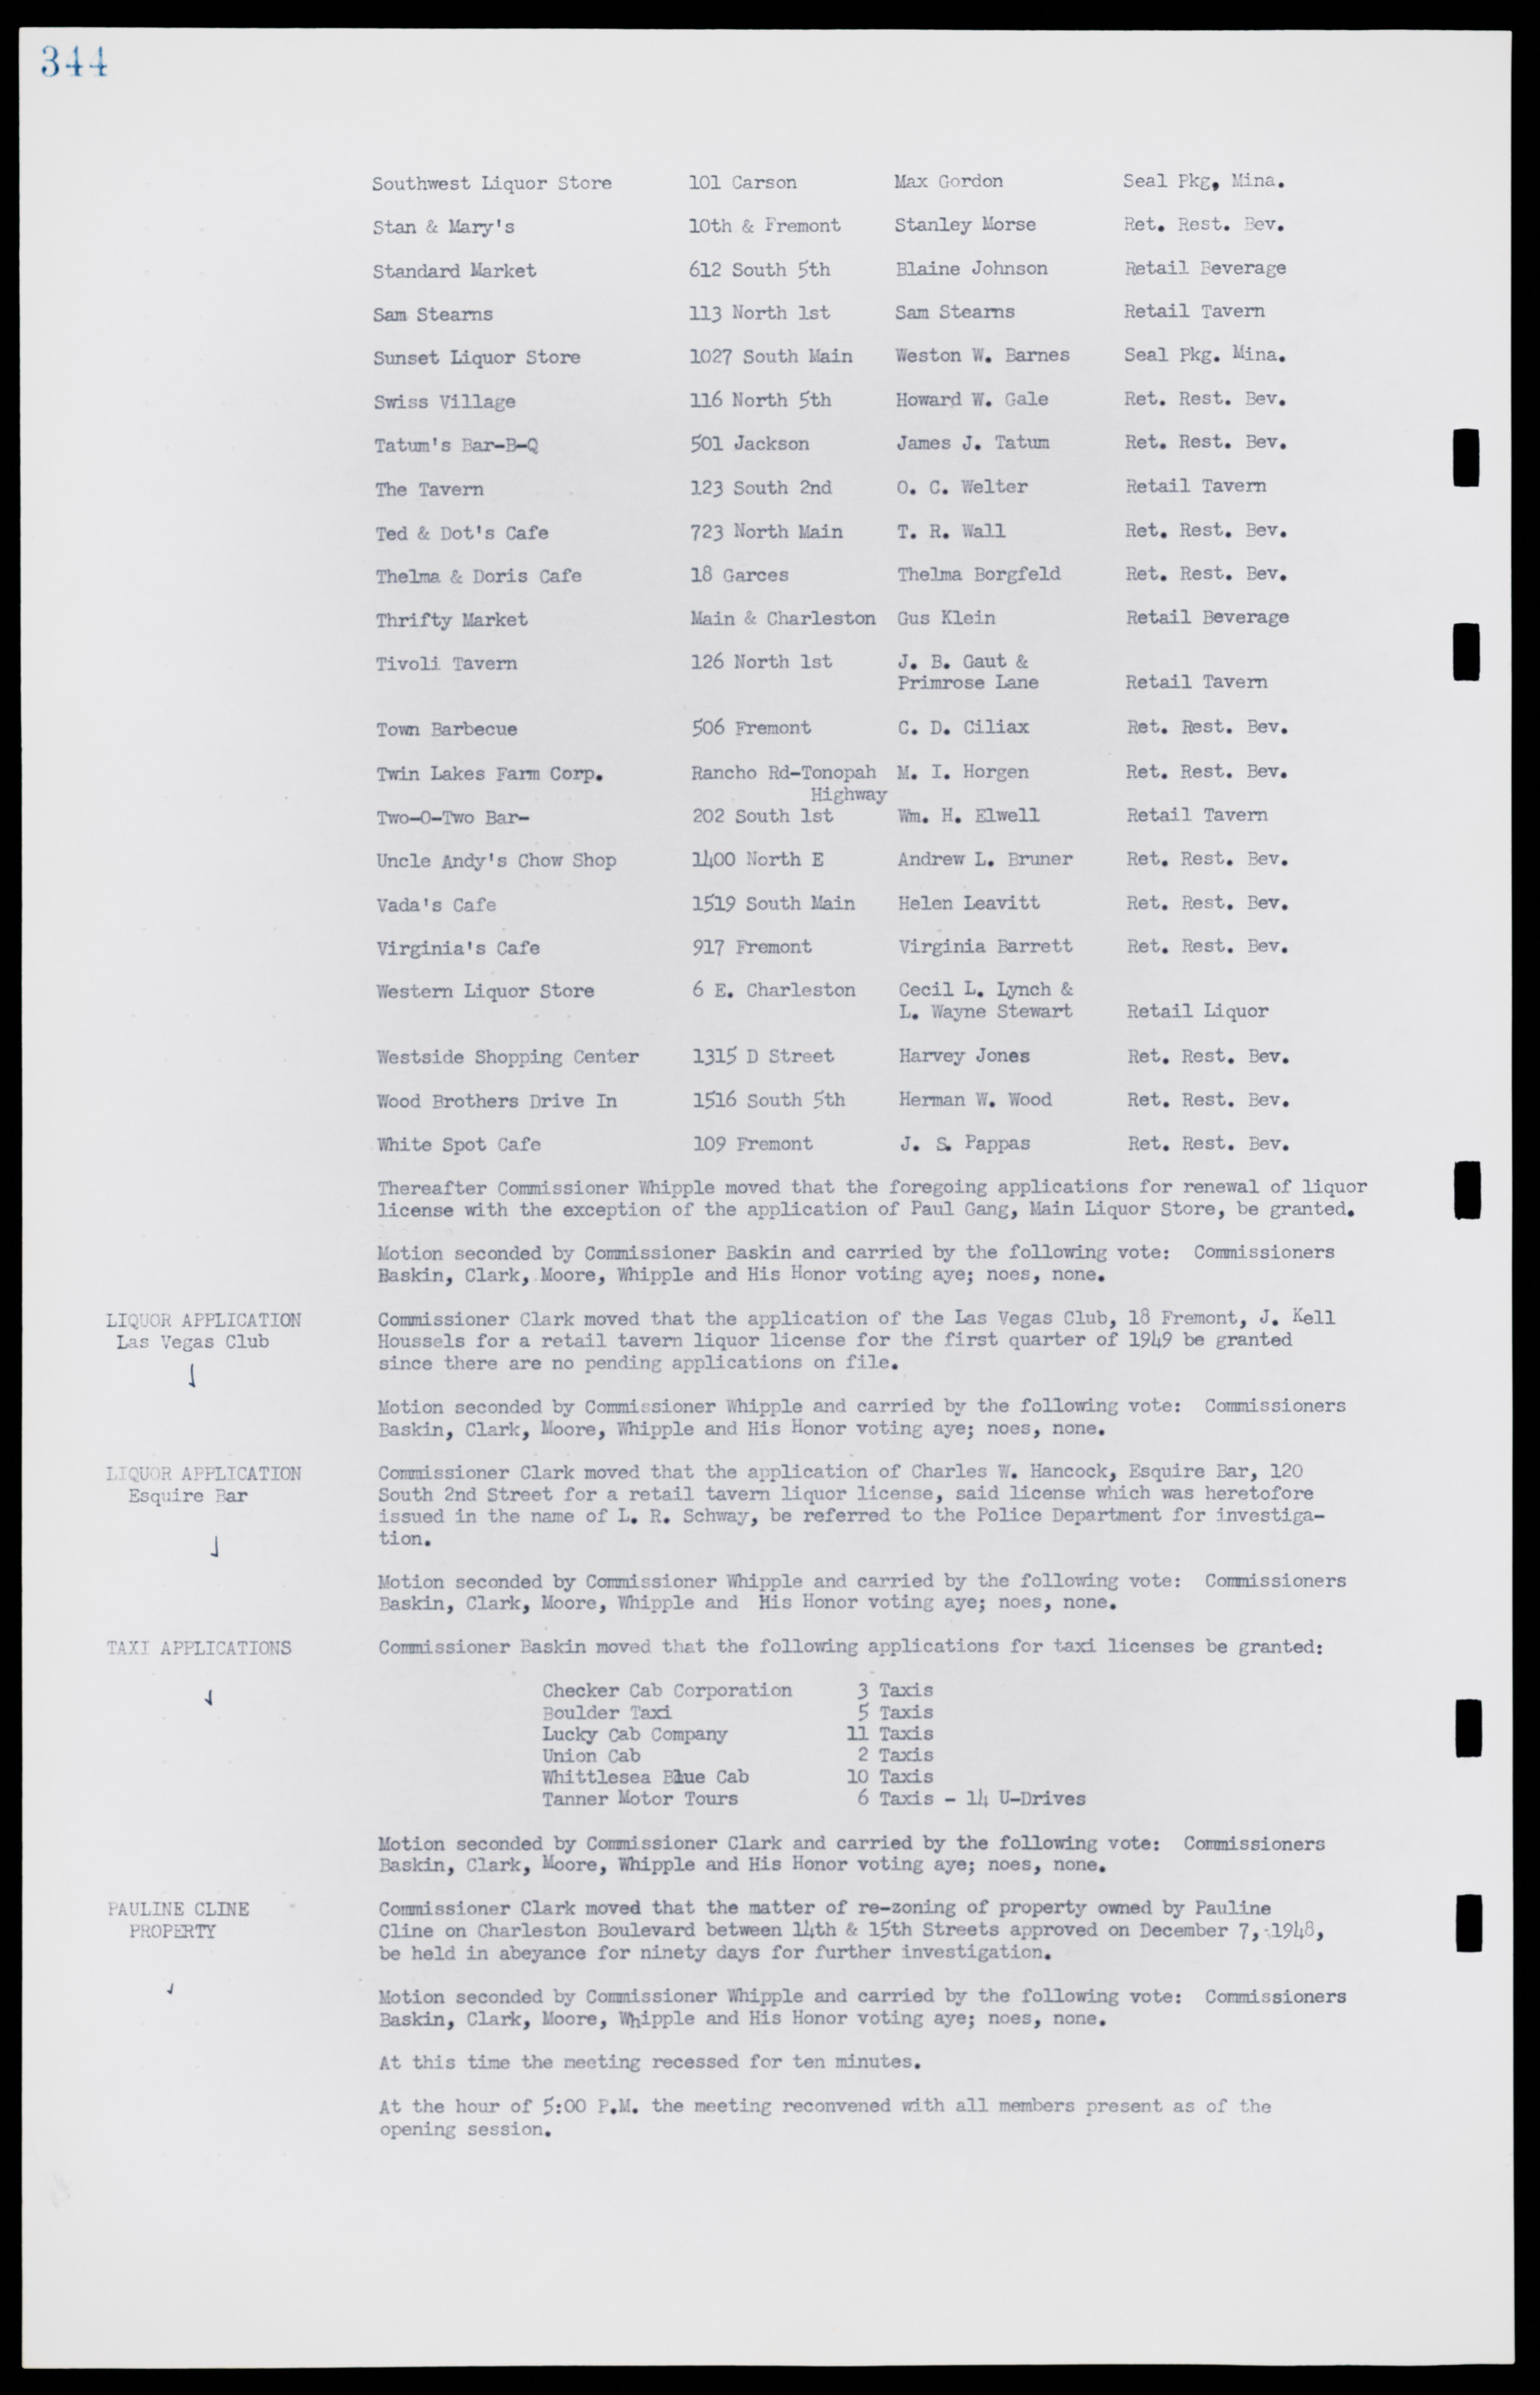 Las Vegas City Commission Minutes, January 7, 1947 to October 26, 1949, lvc000006-368